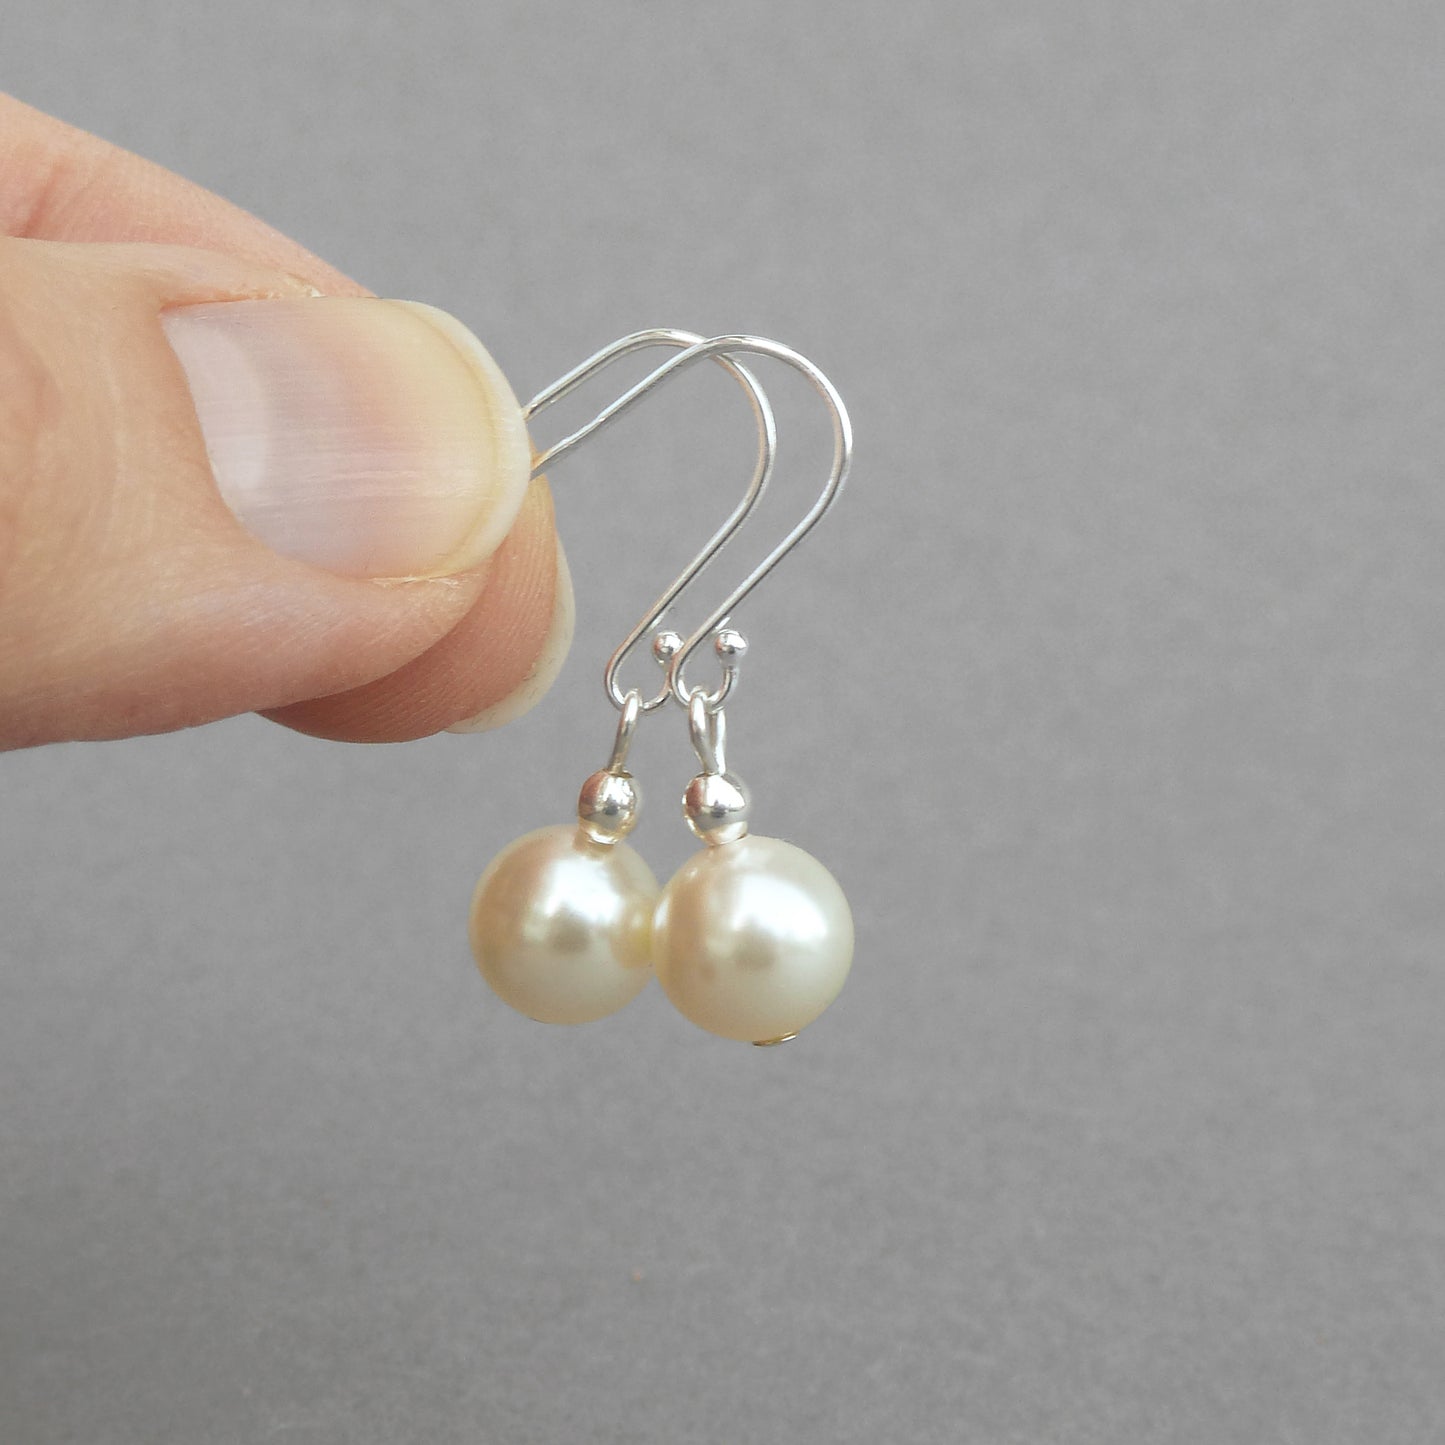 8mm cream pearl bridesmaids earrings